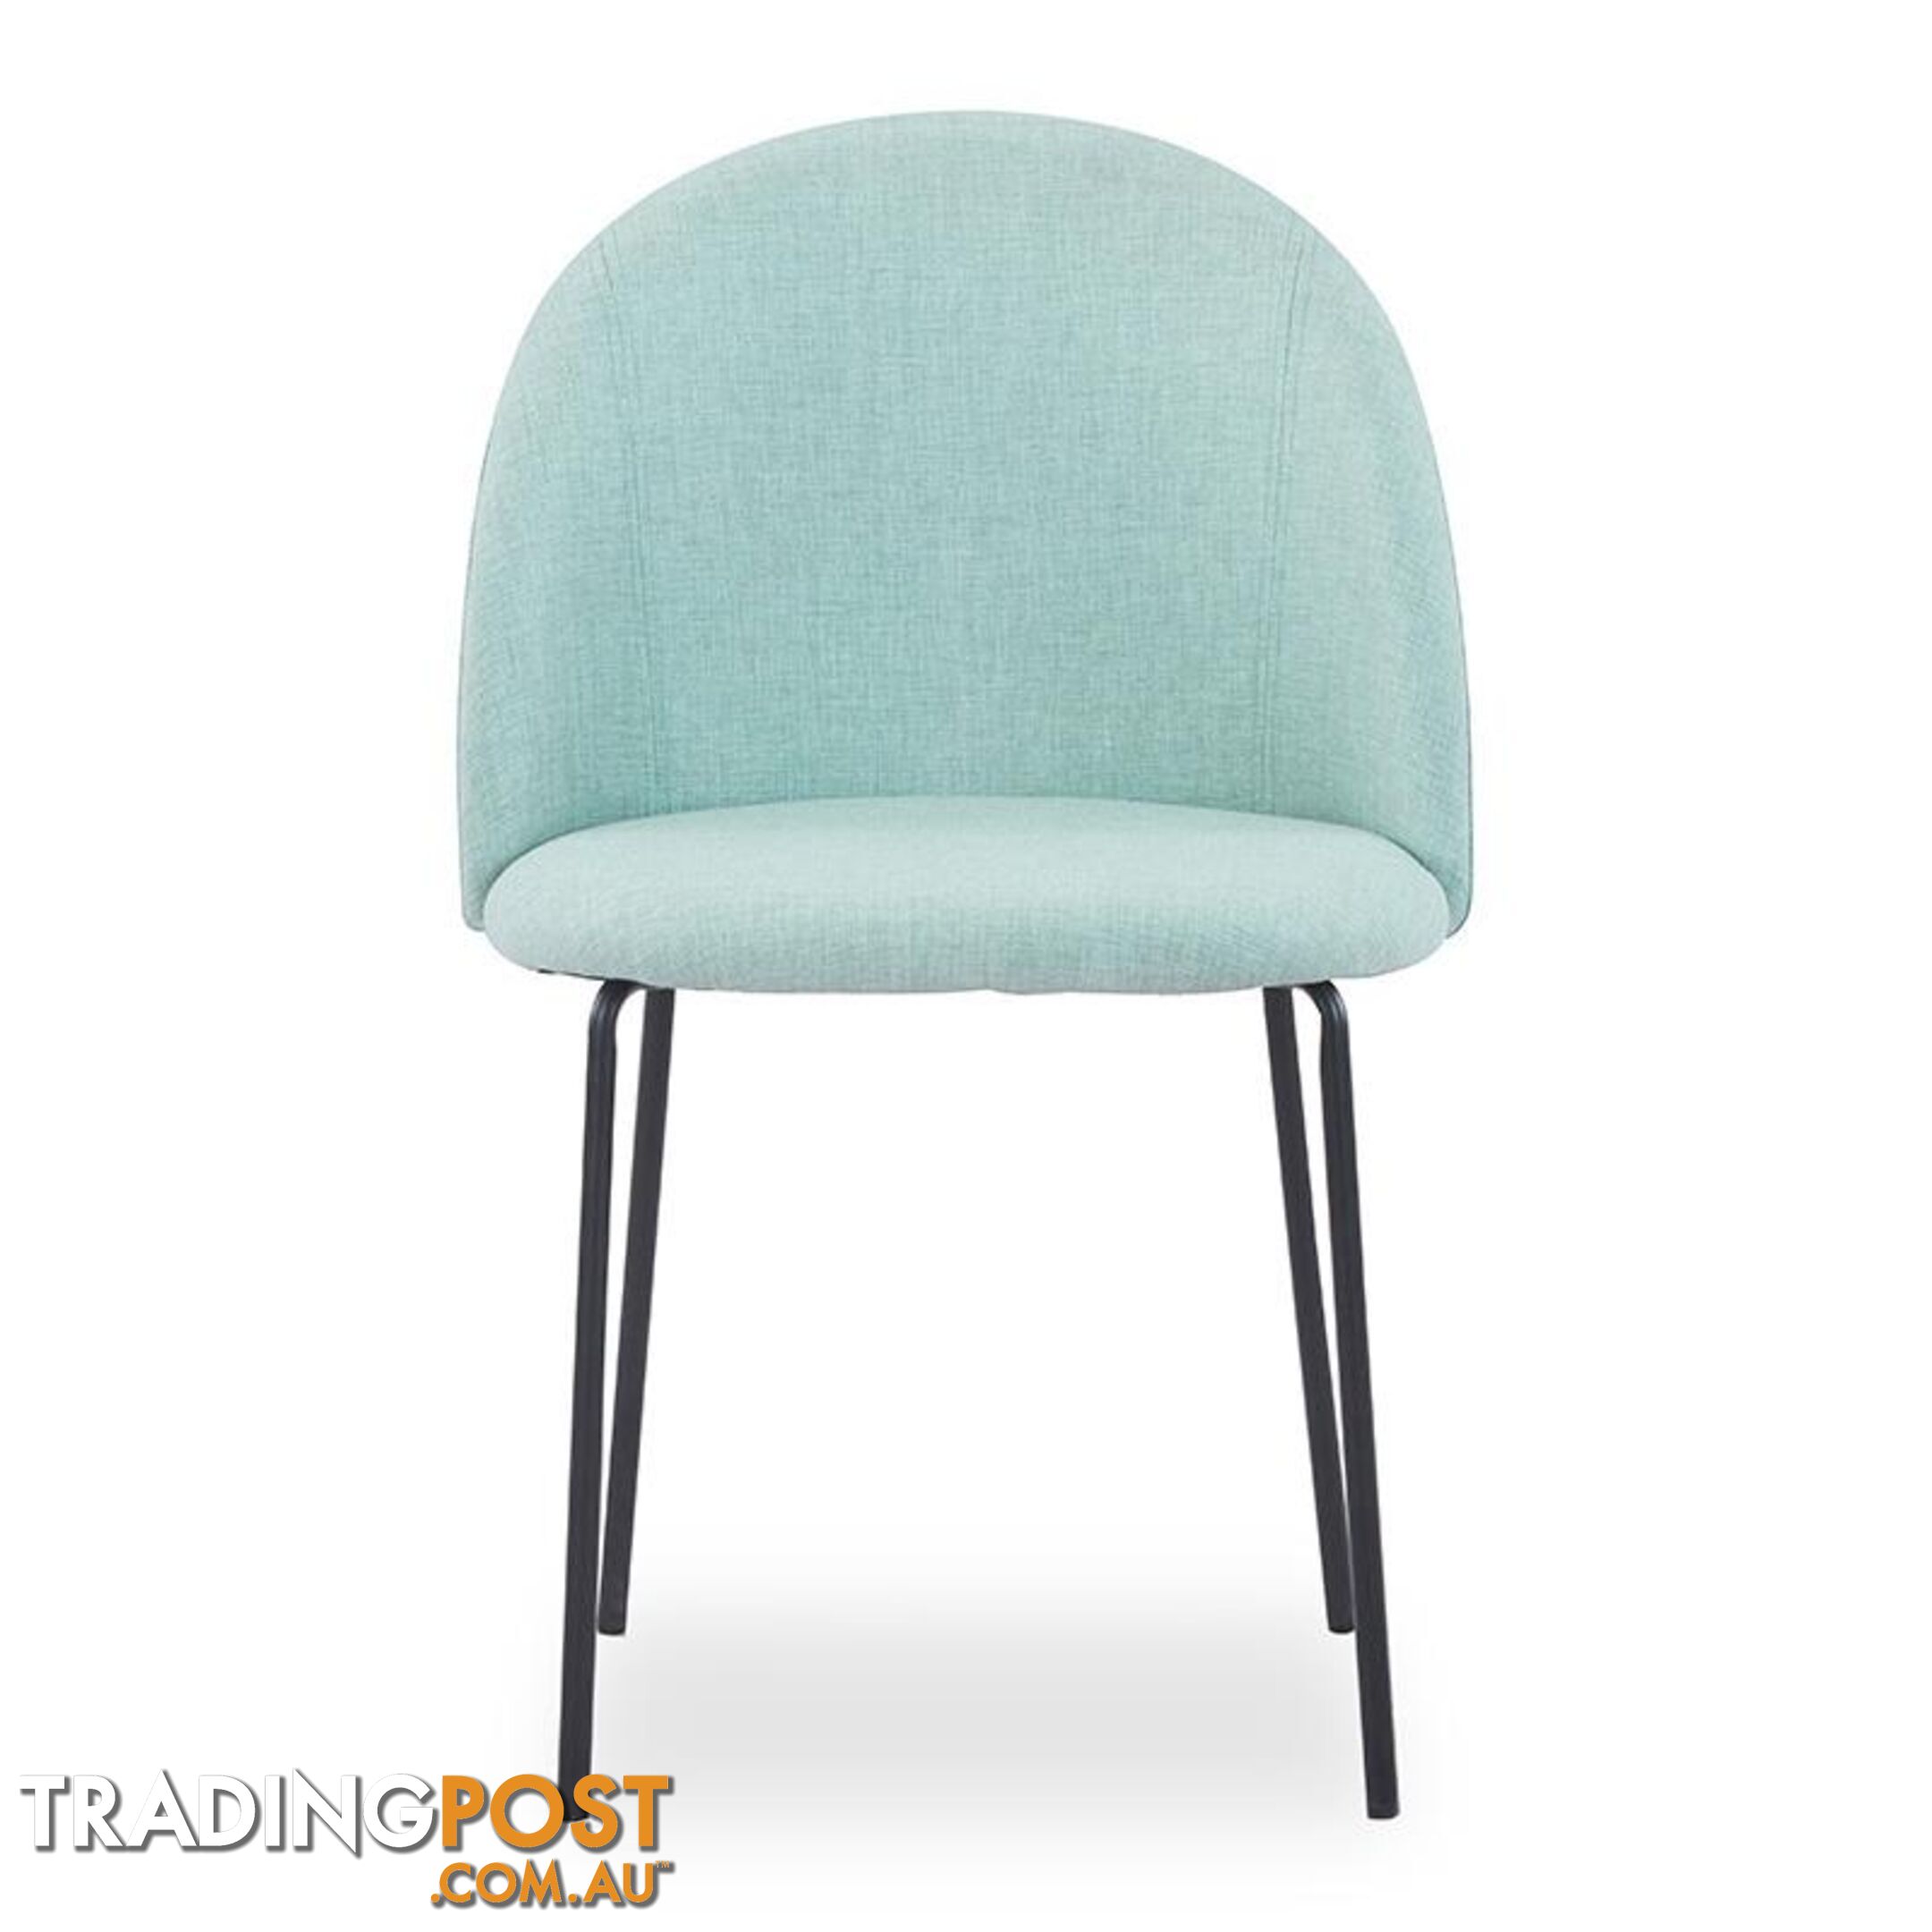 ARINA Dining Chair - Mint Green - DT-C962-B93 - 9334719002156